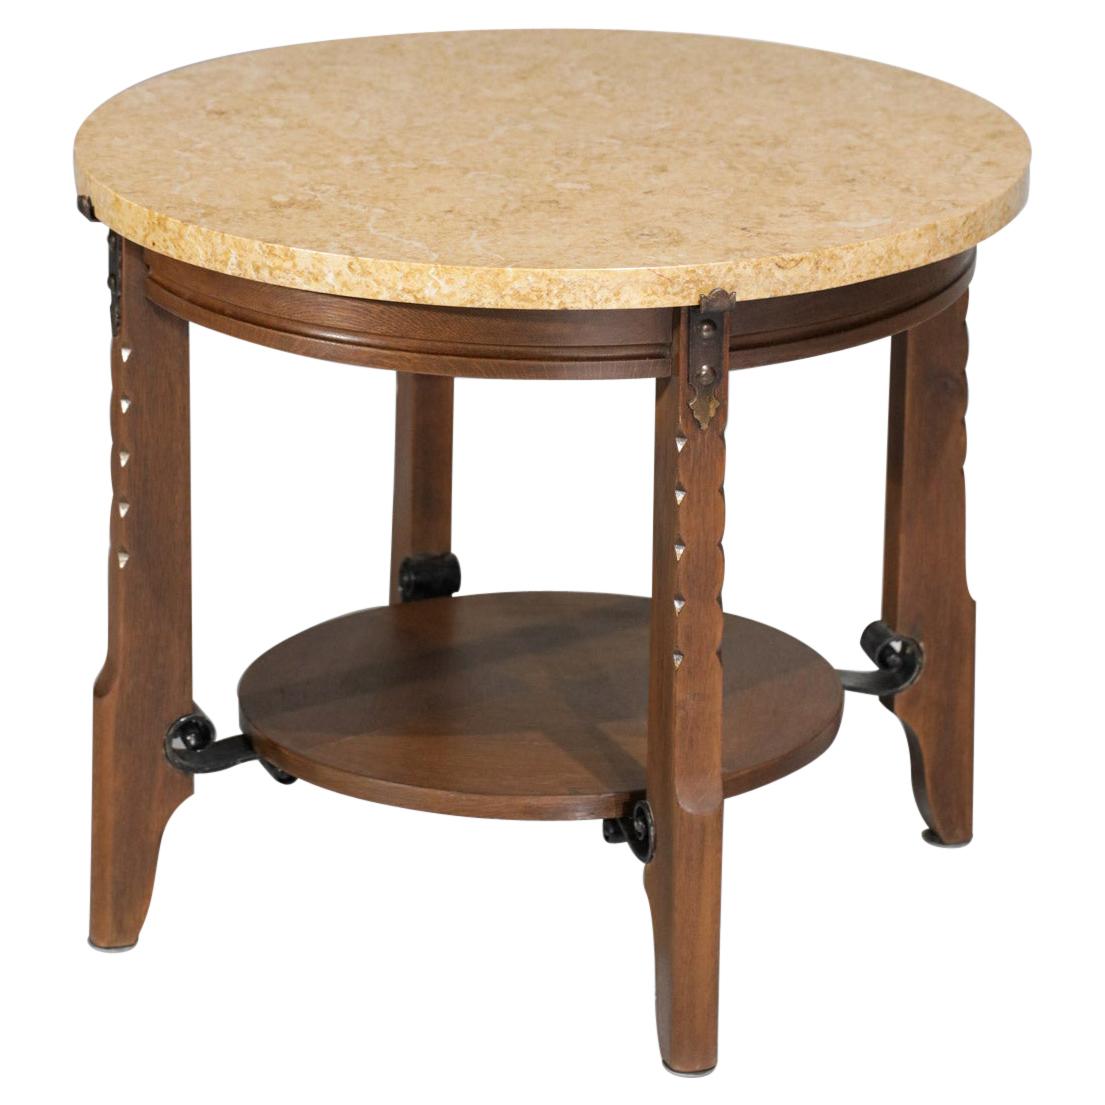 Oak and Travertine Art Deco Coffee Table 1930's Gueridon, E556 For Sale